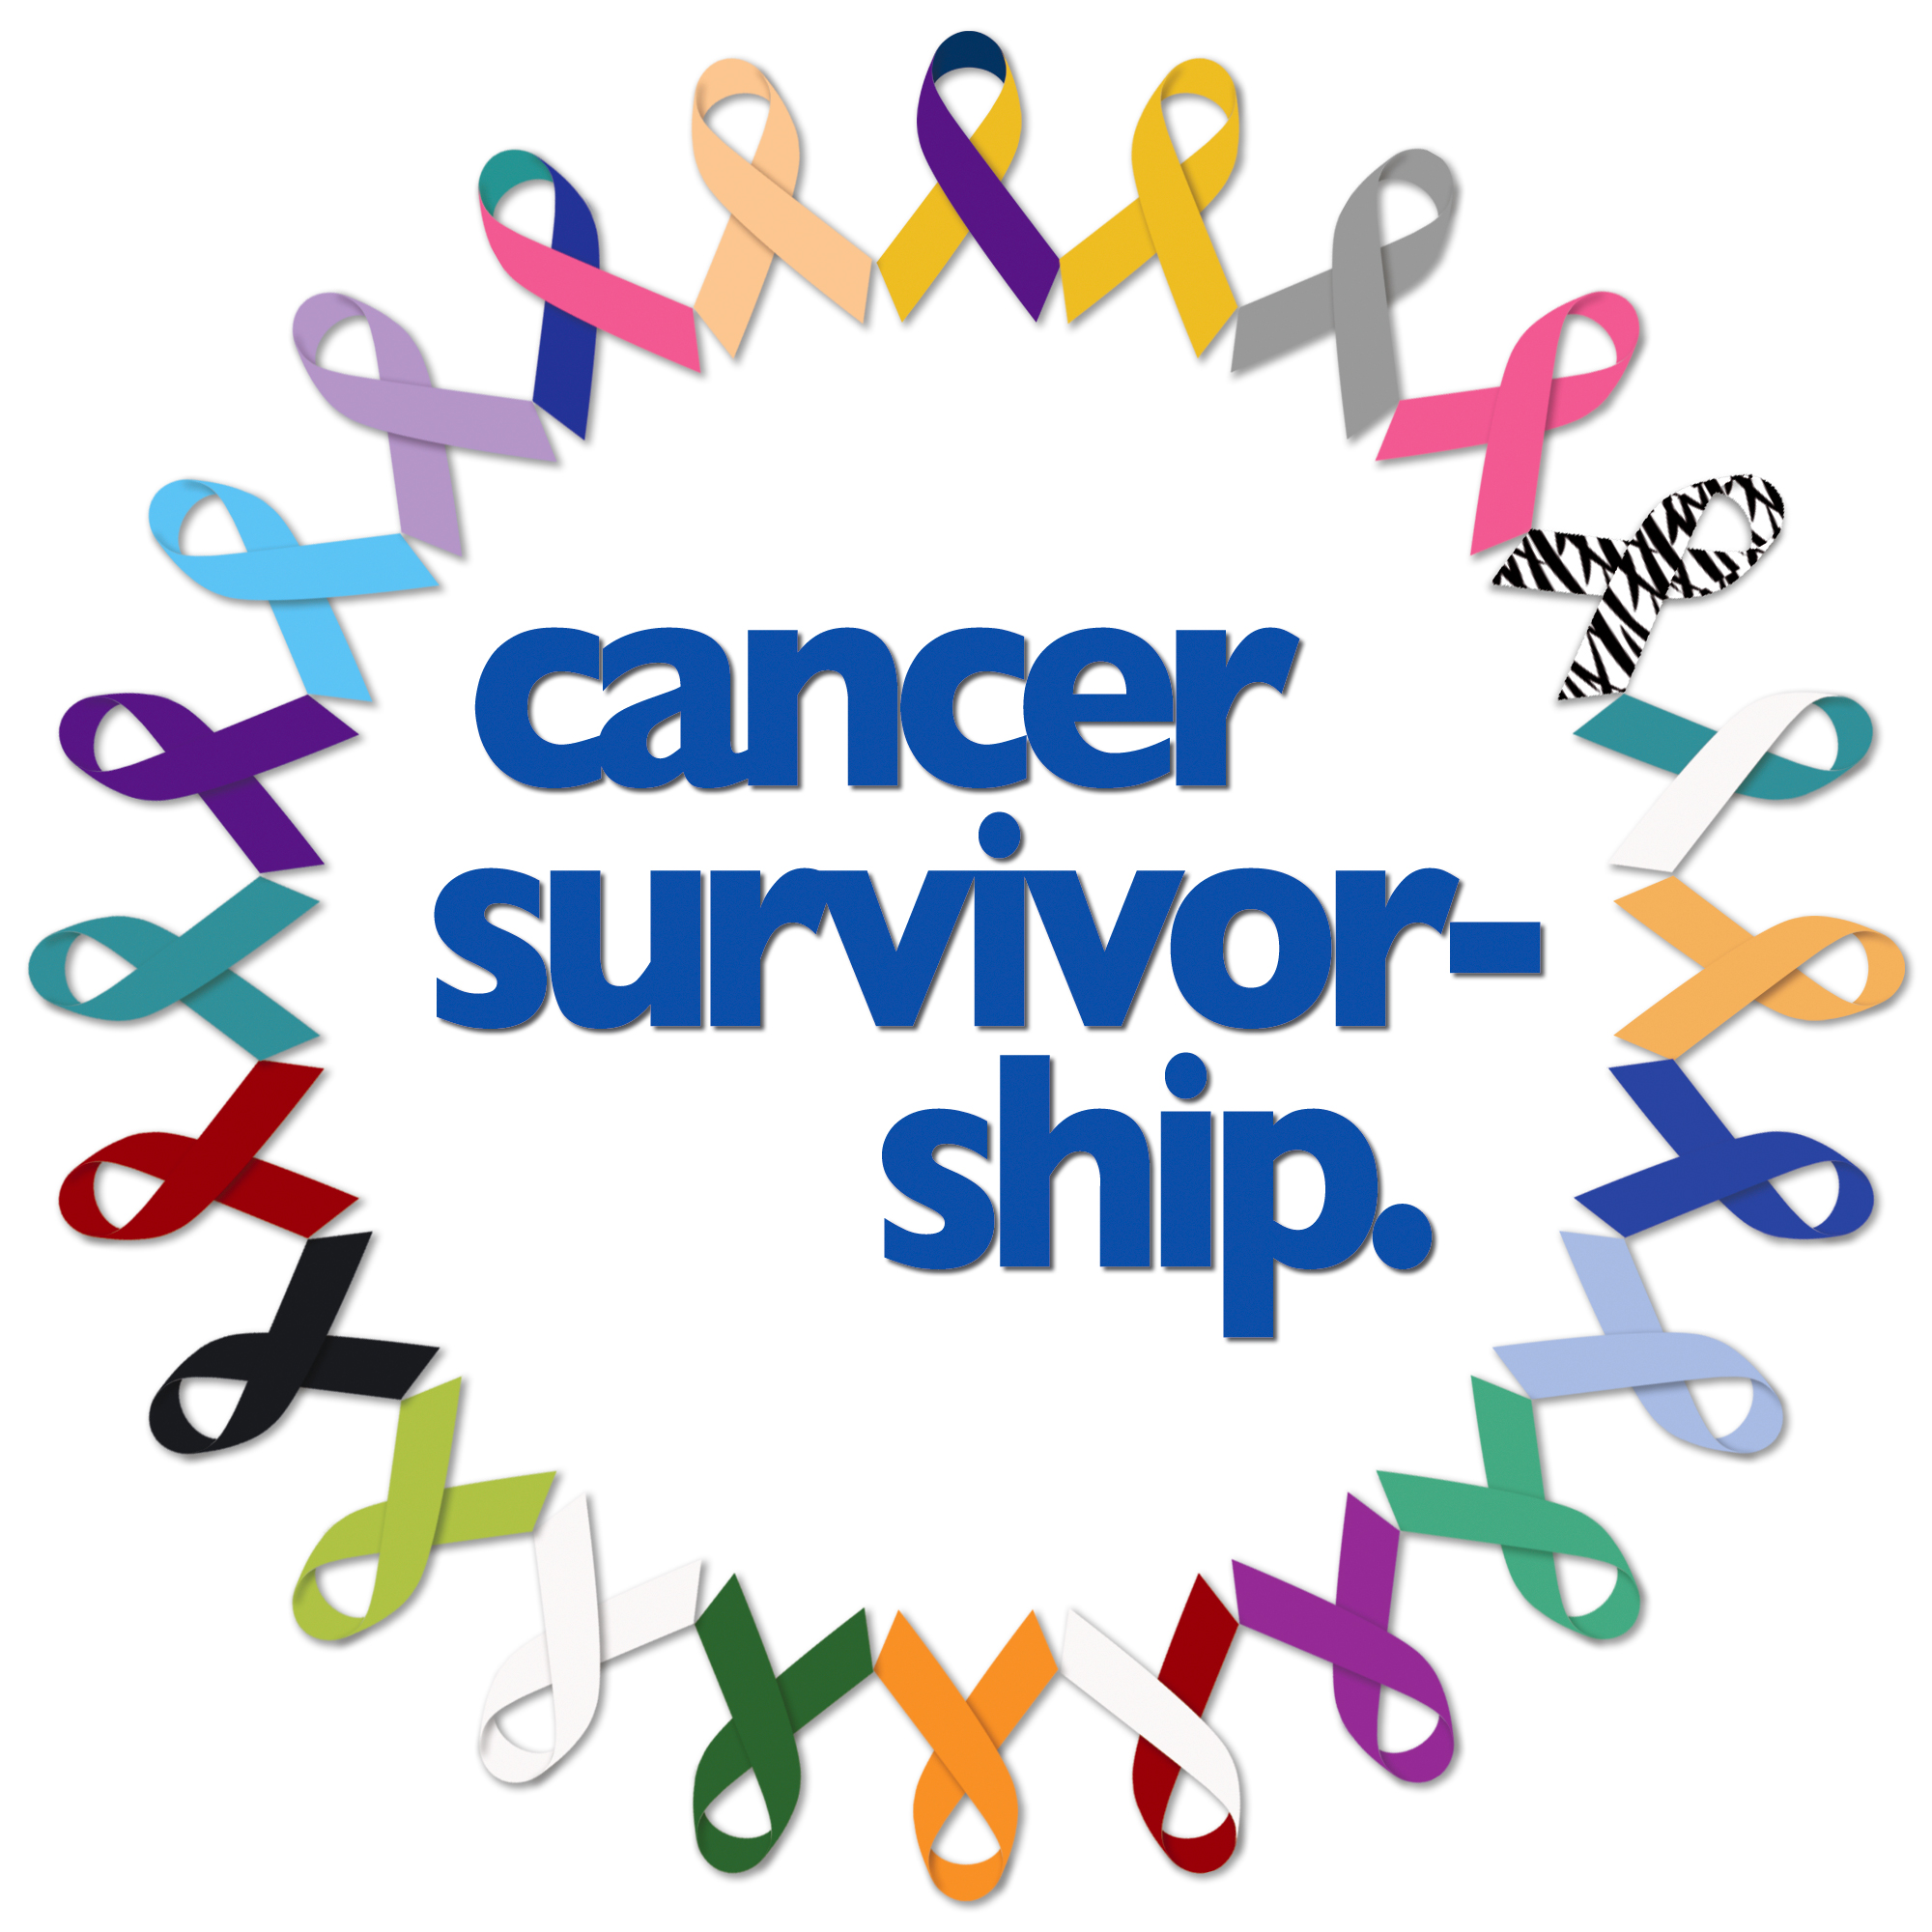 https://www.dkfz.de/de/cancer-survivorship/bilder/LogoC071.jpg